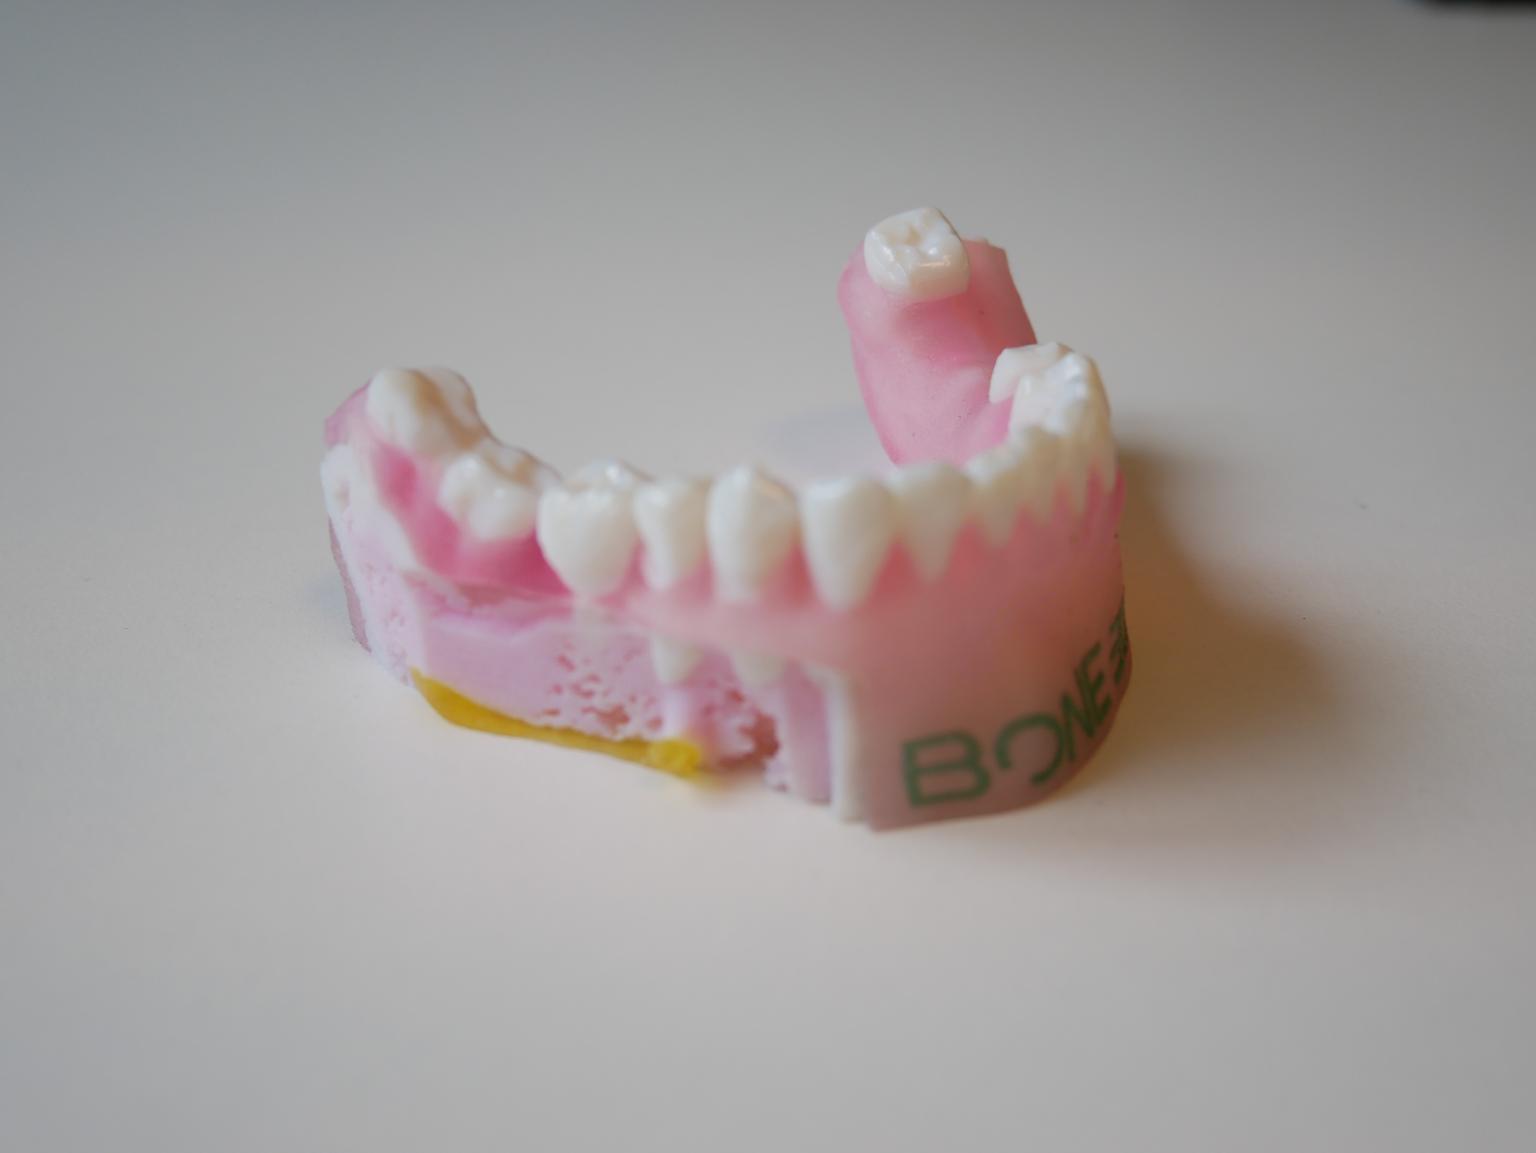 A 3D printed orthodontic model produced on the Stratasys J750. Photo via Bone 3D.